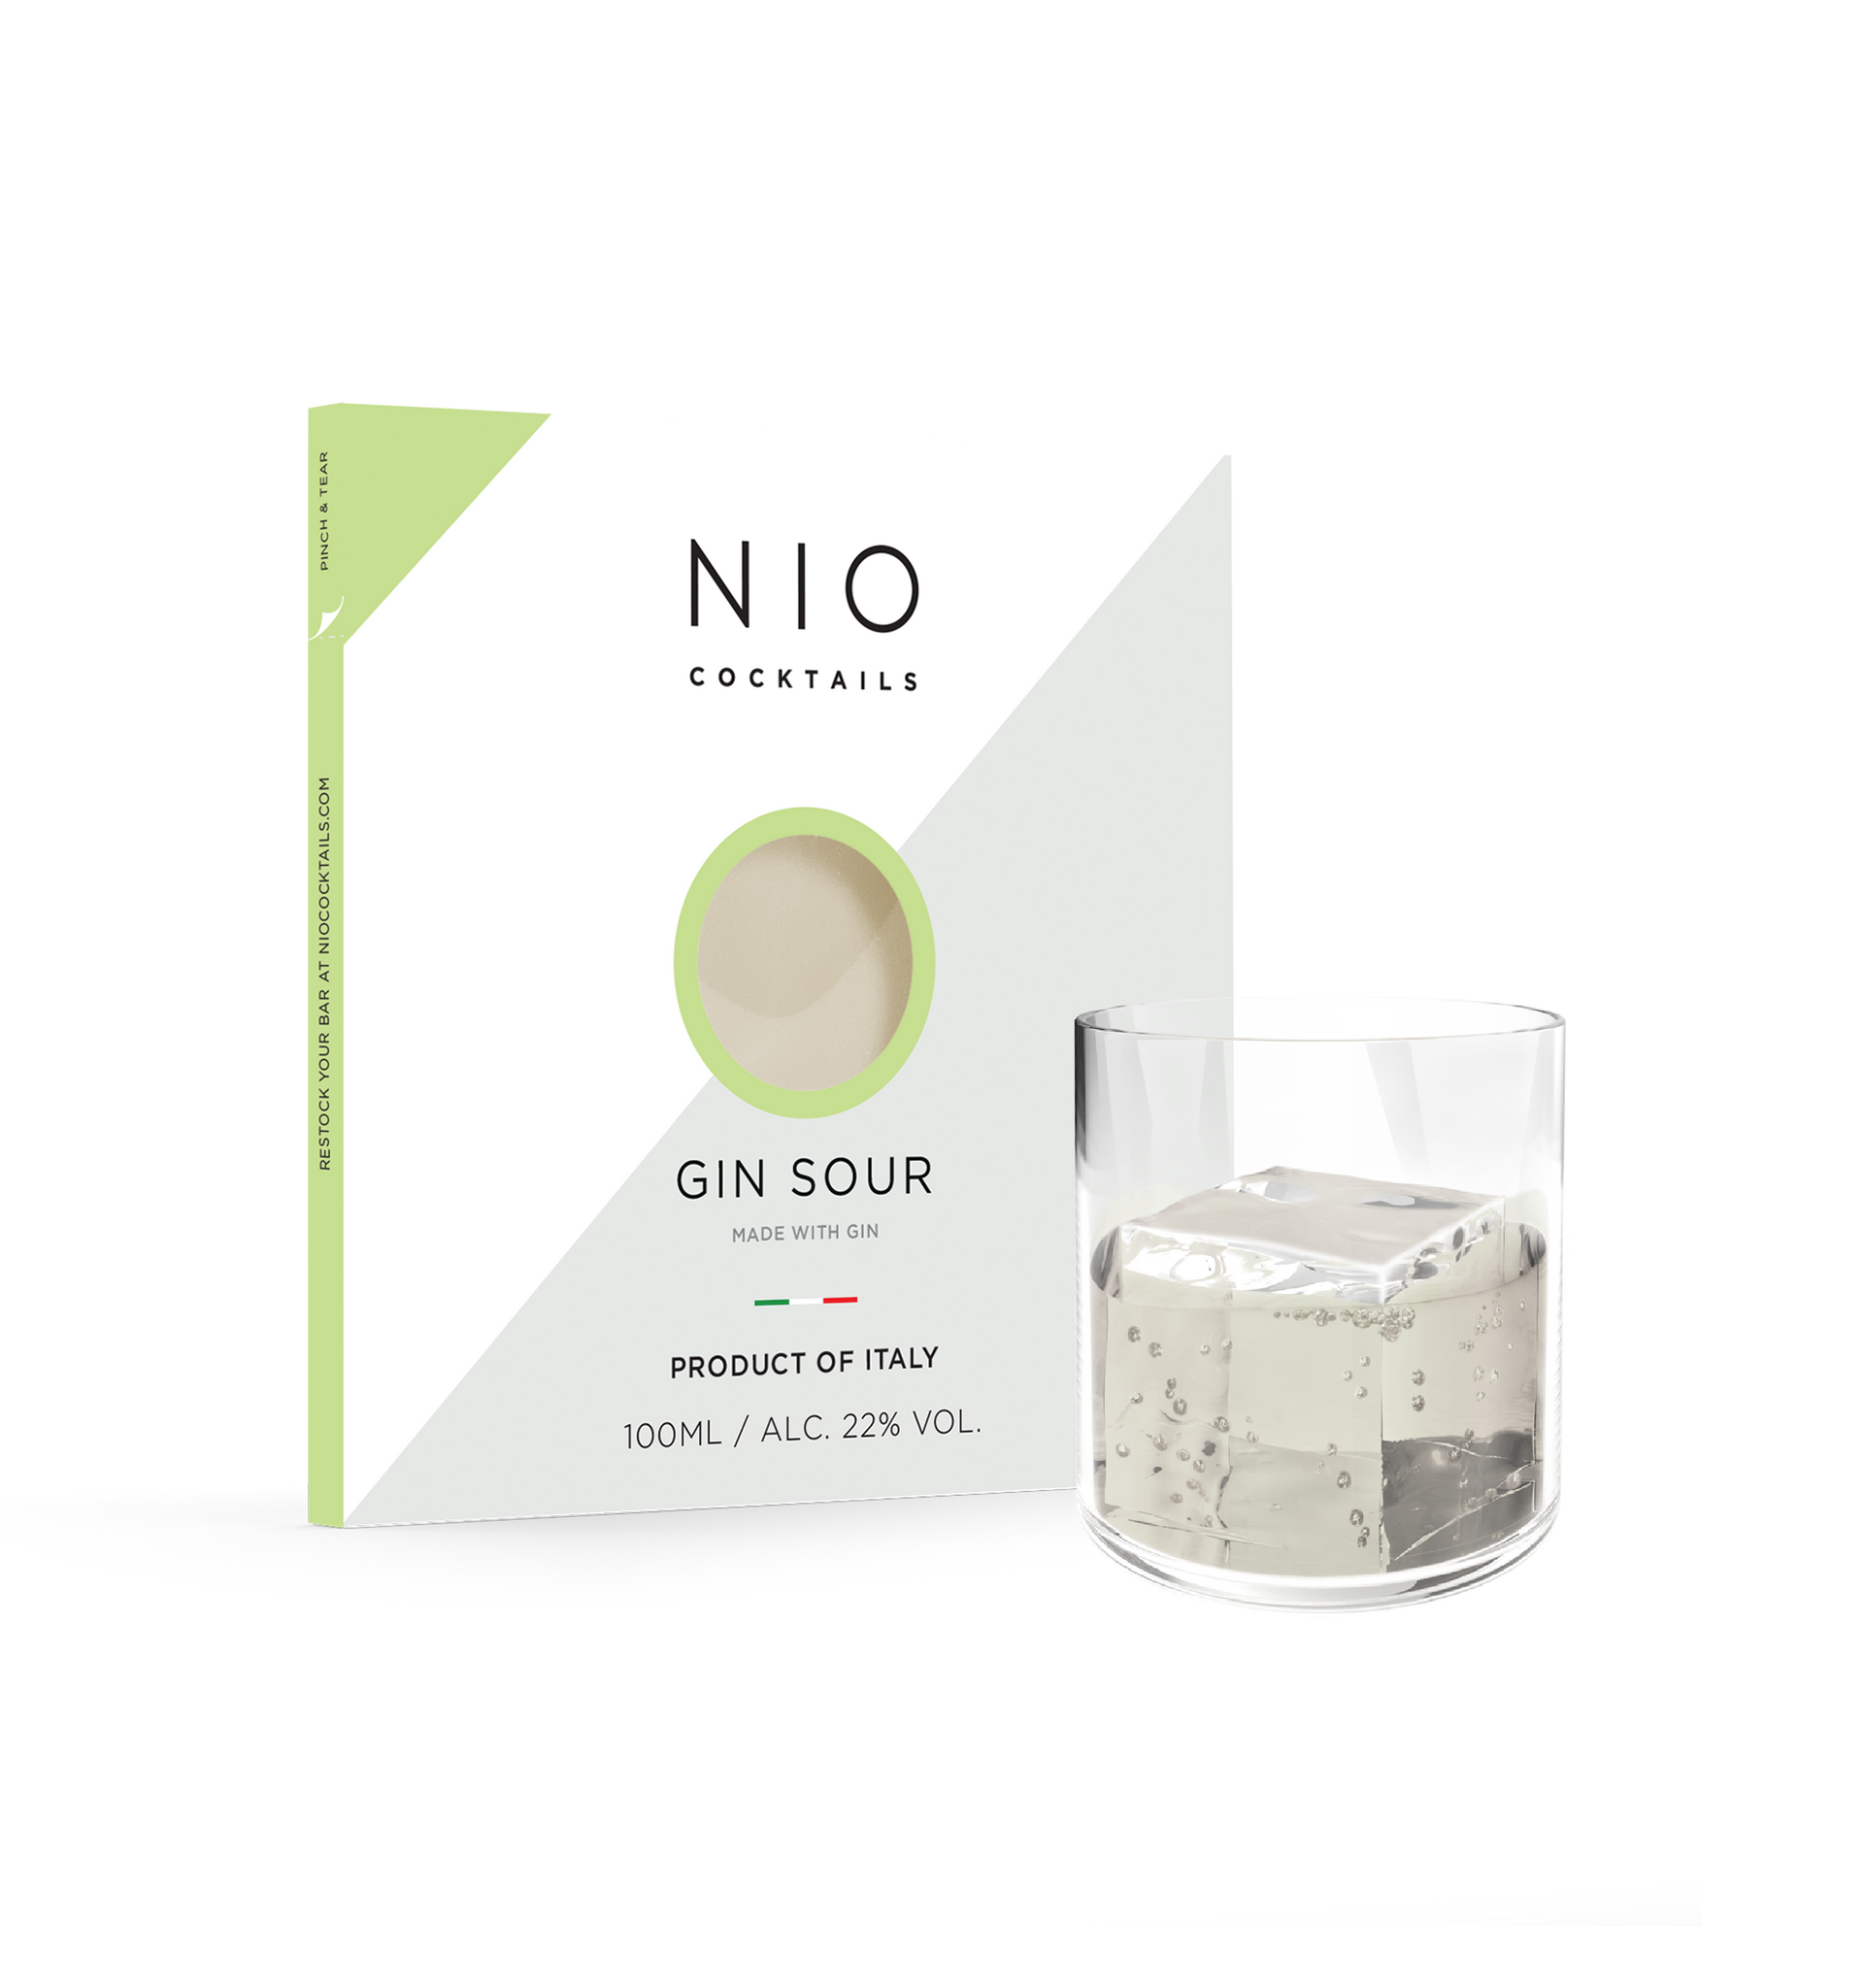 NIO COCKTAILS Gin Sour glass